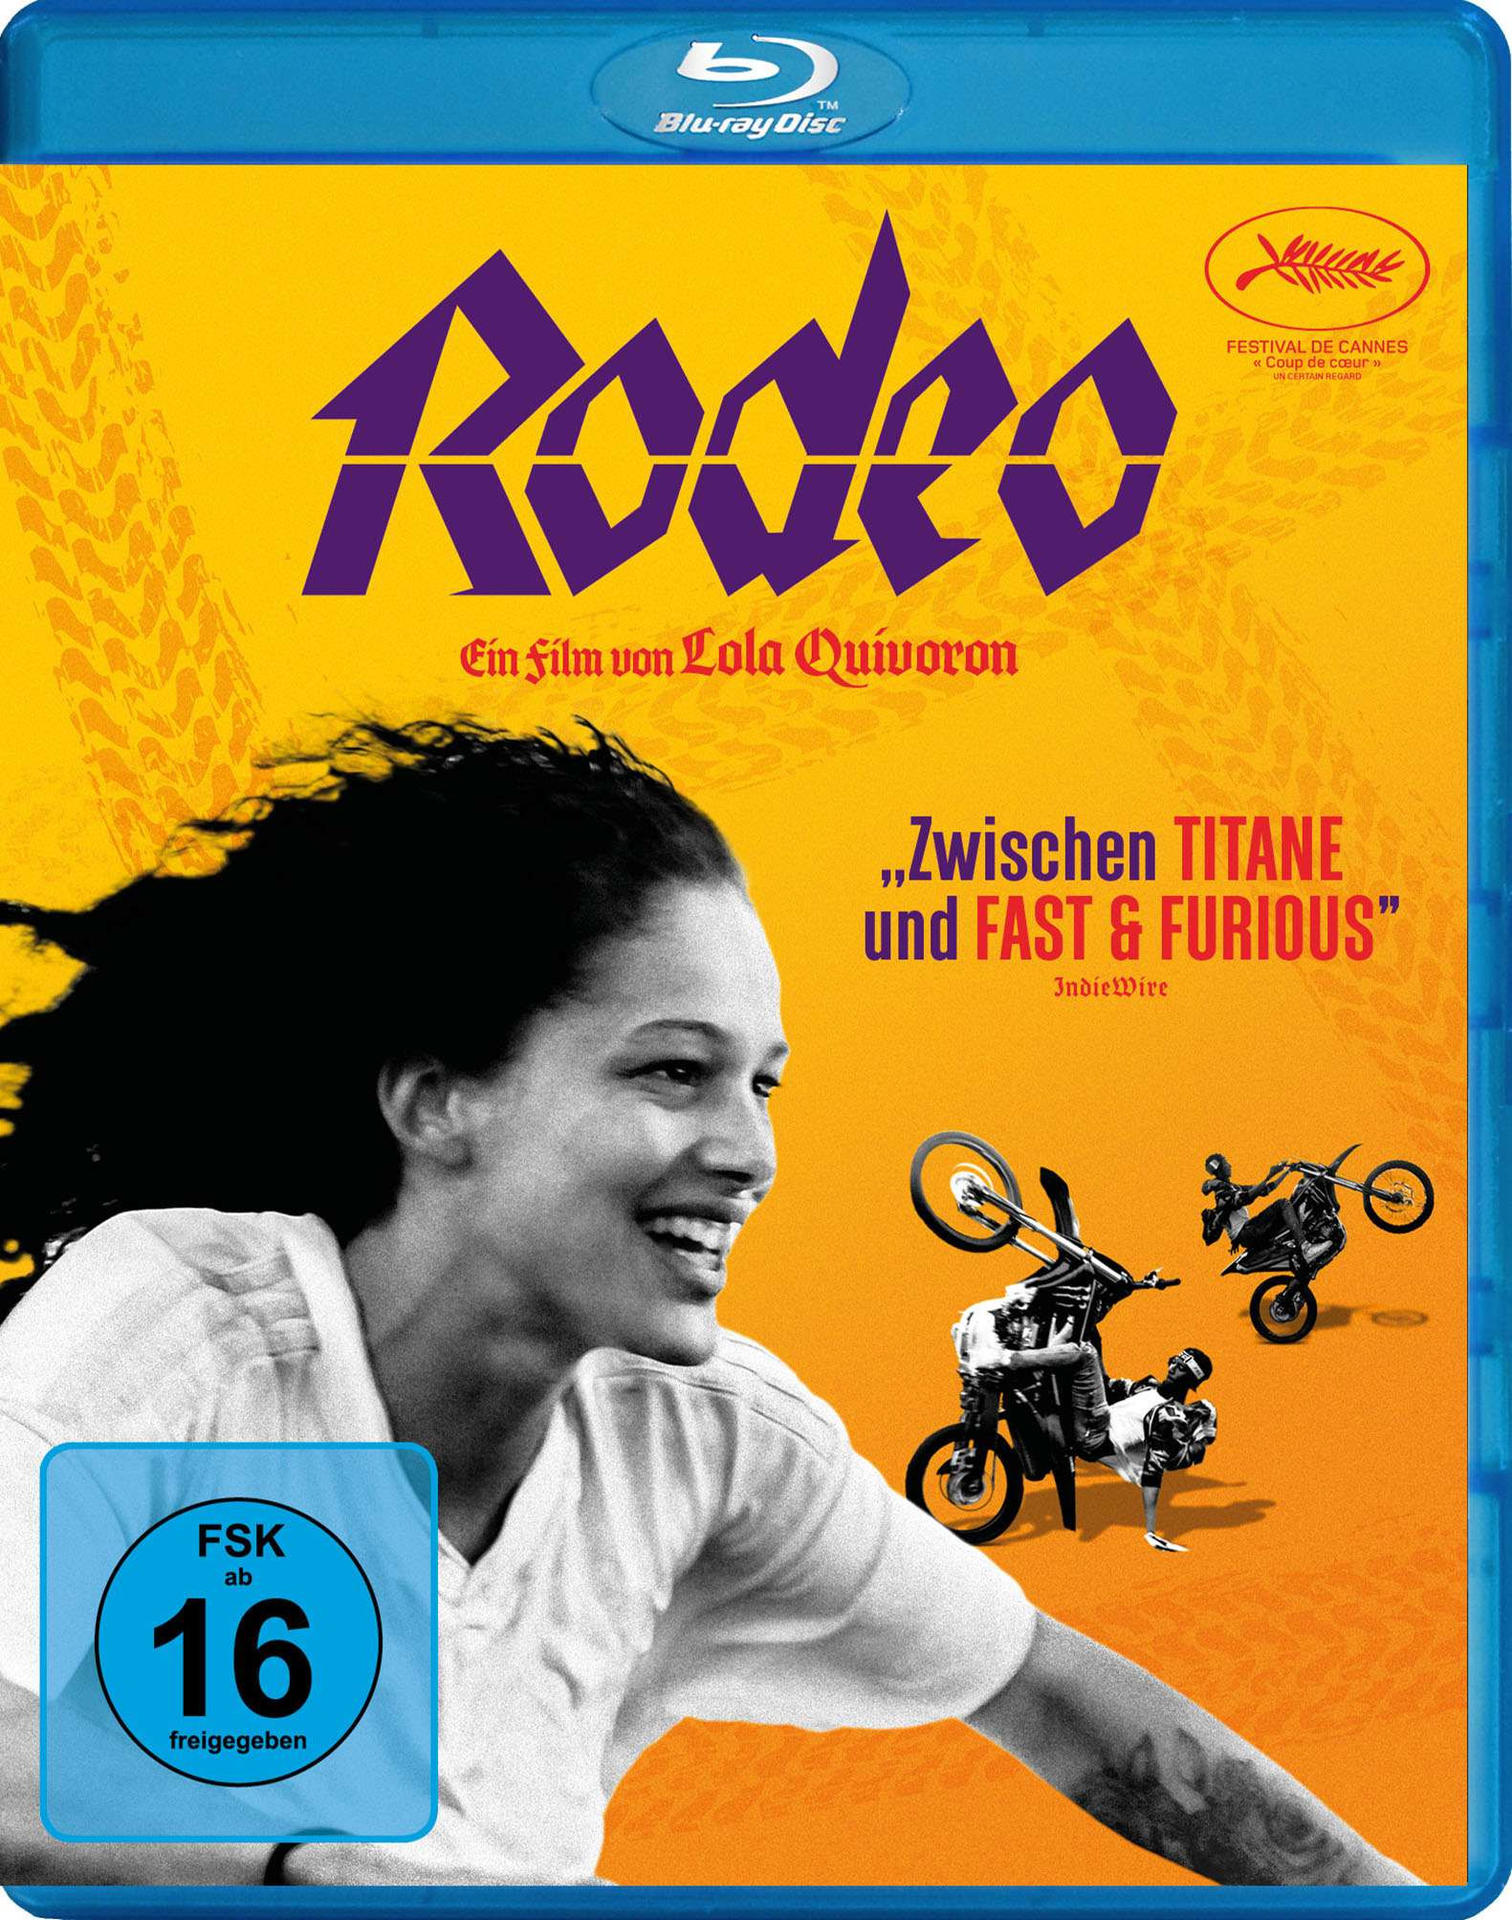 Rodeo Blu-ray